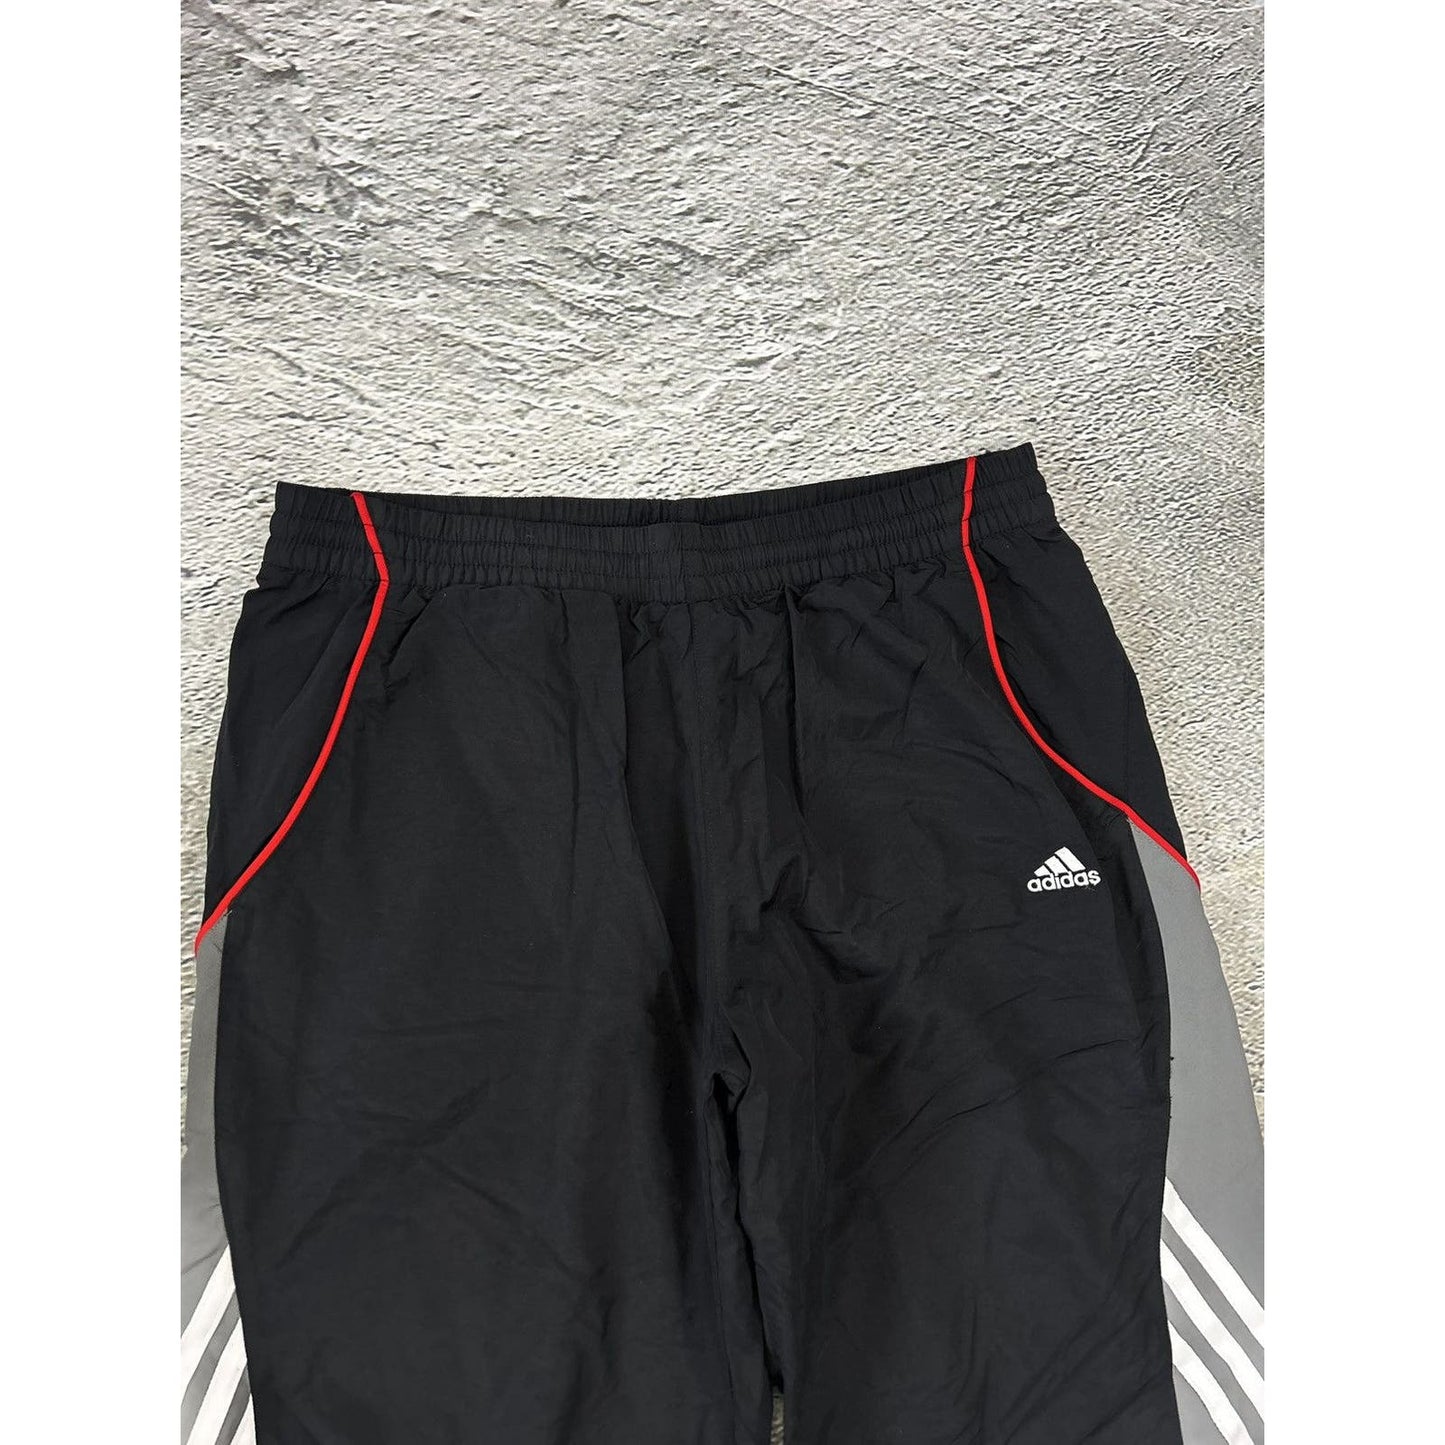 Liverpool Adidas track suit vintage nylon red white black